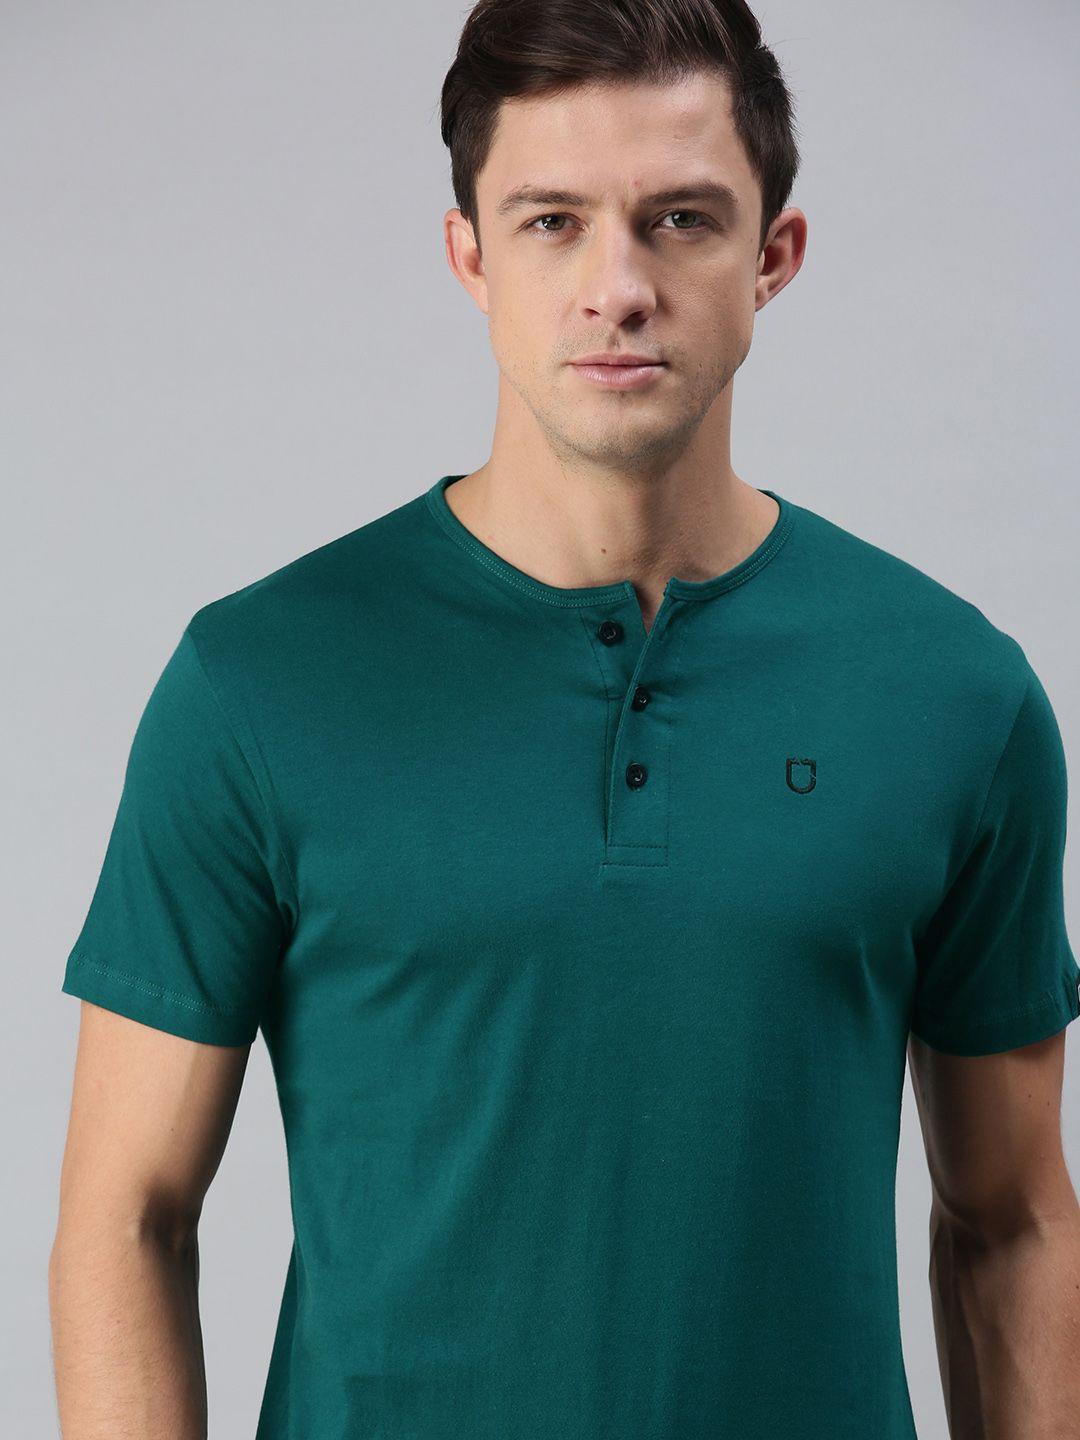 urbano fashion men teal green henley neck pure cotton slim fit pure cotton t-shirt